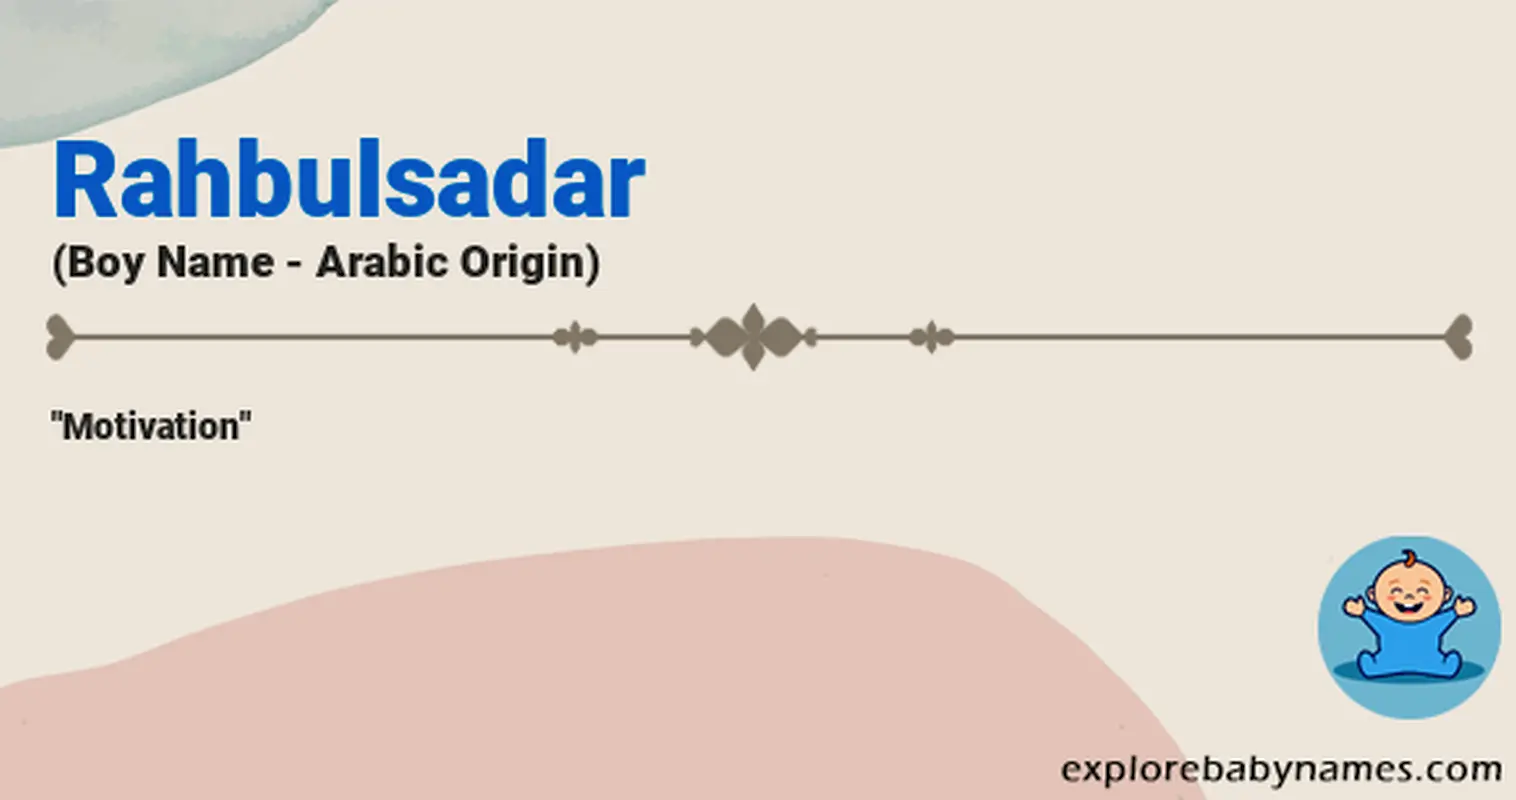 Meaning of Rahbulsadar